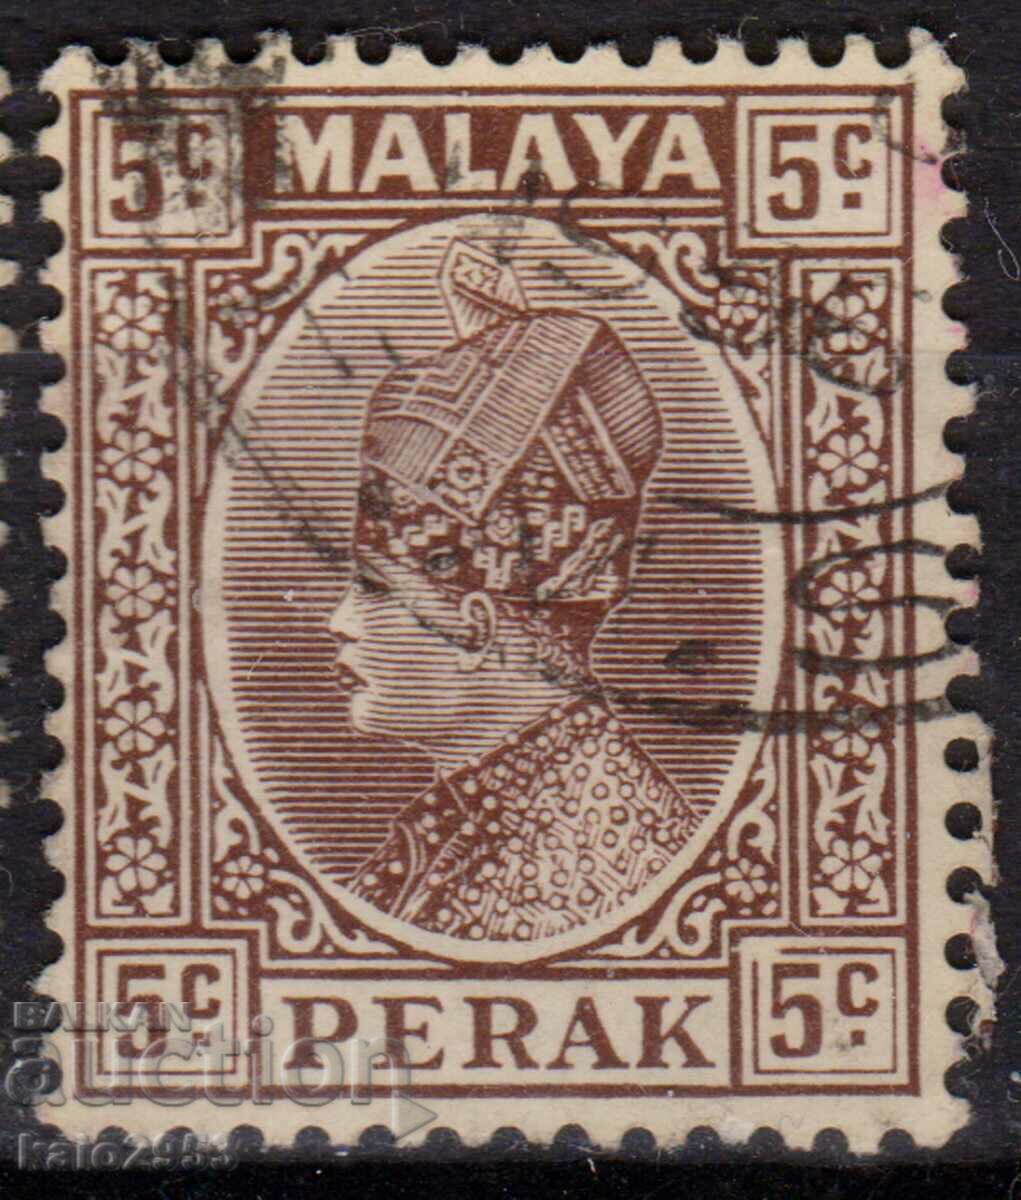 GB/Malaya/Perak-1935-Regular-Sultan Iskander, timbru